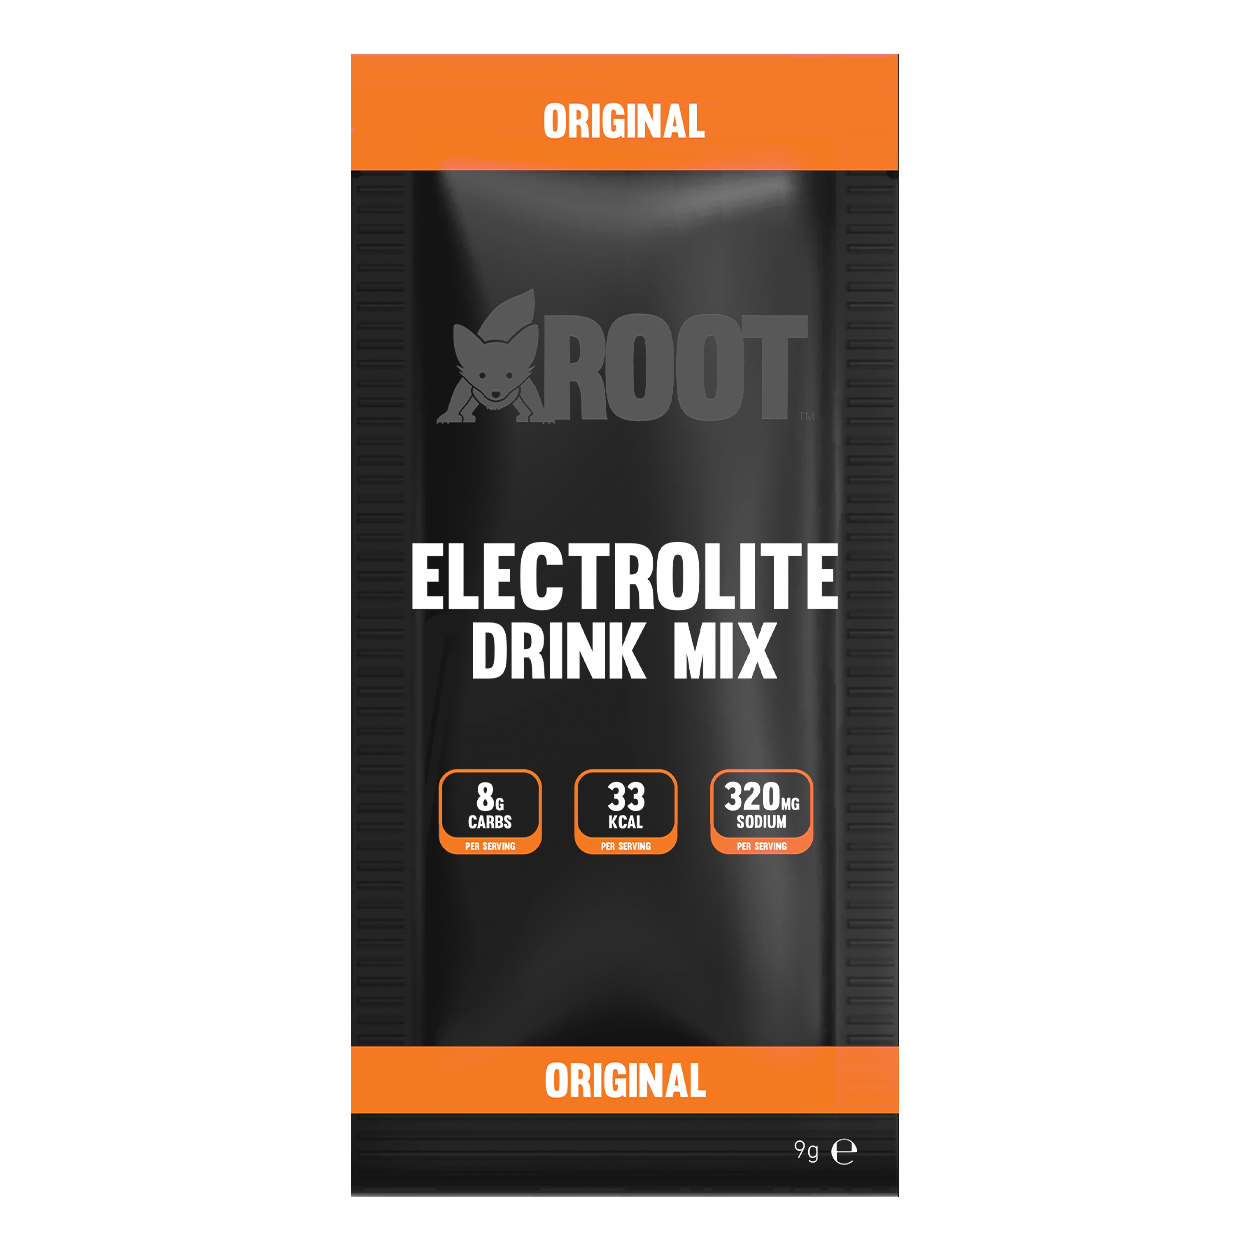 Electrolite Drink Mix